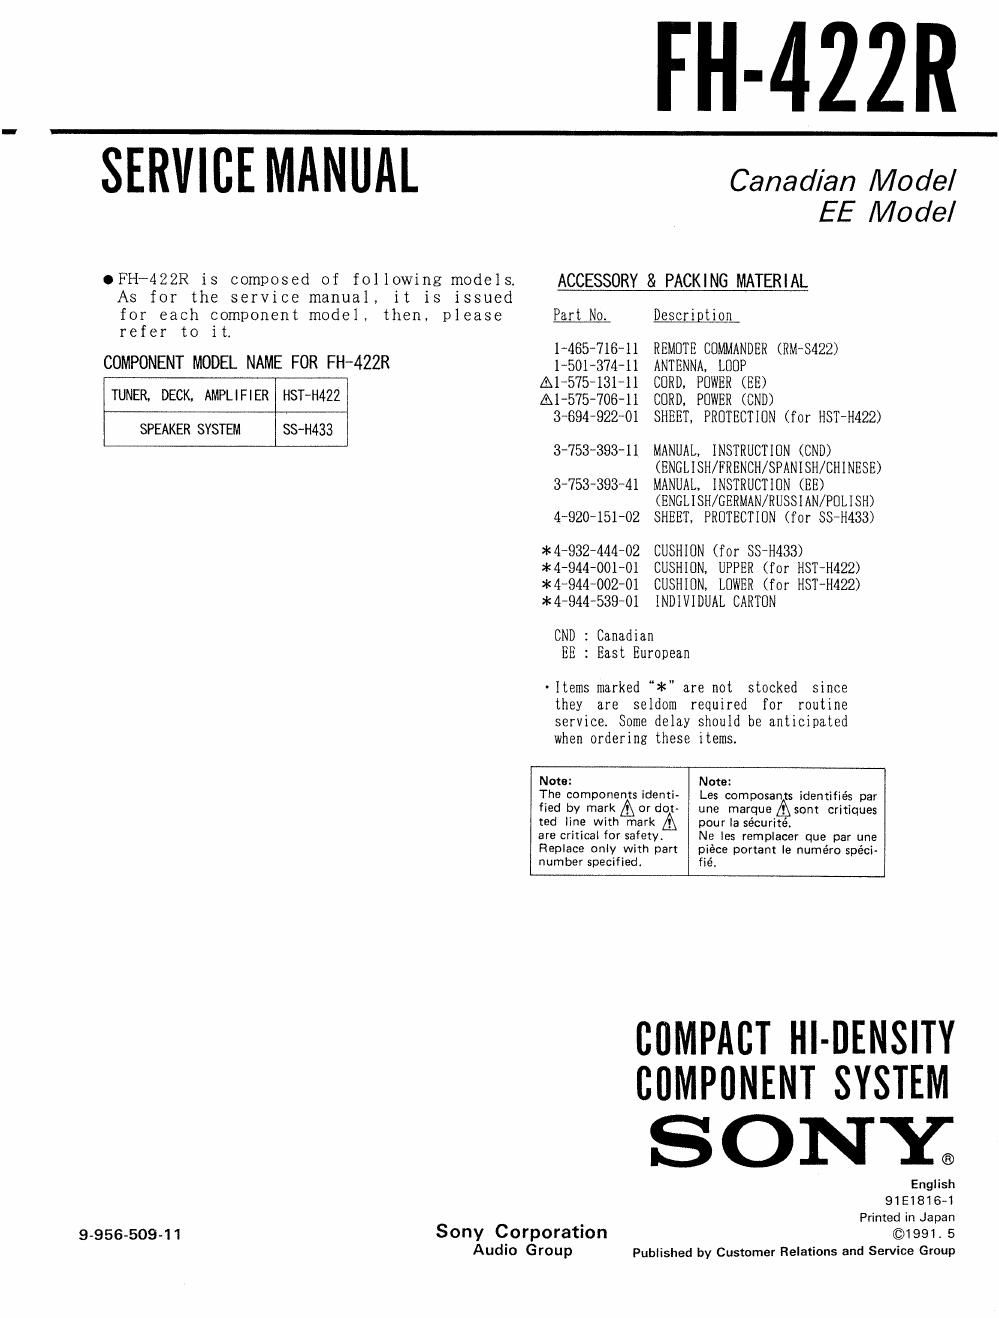 sony fh 422 r service manual